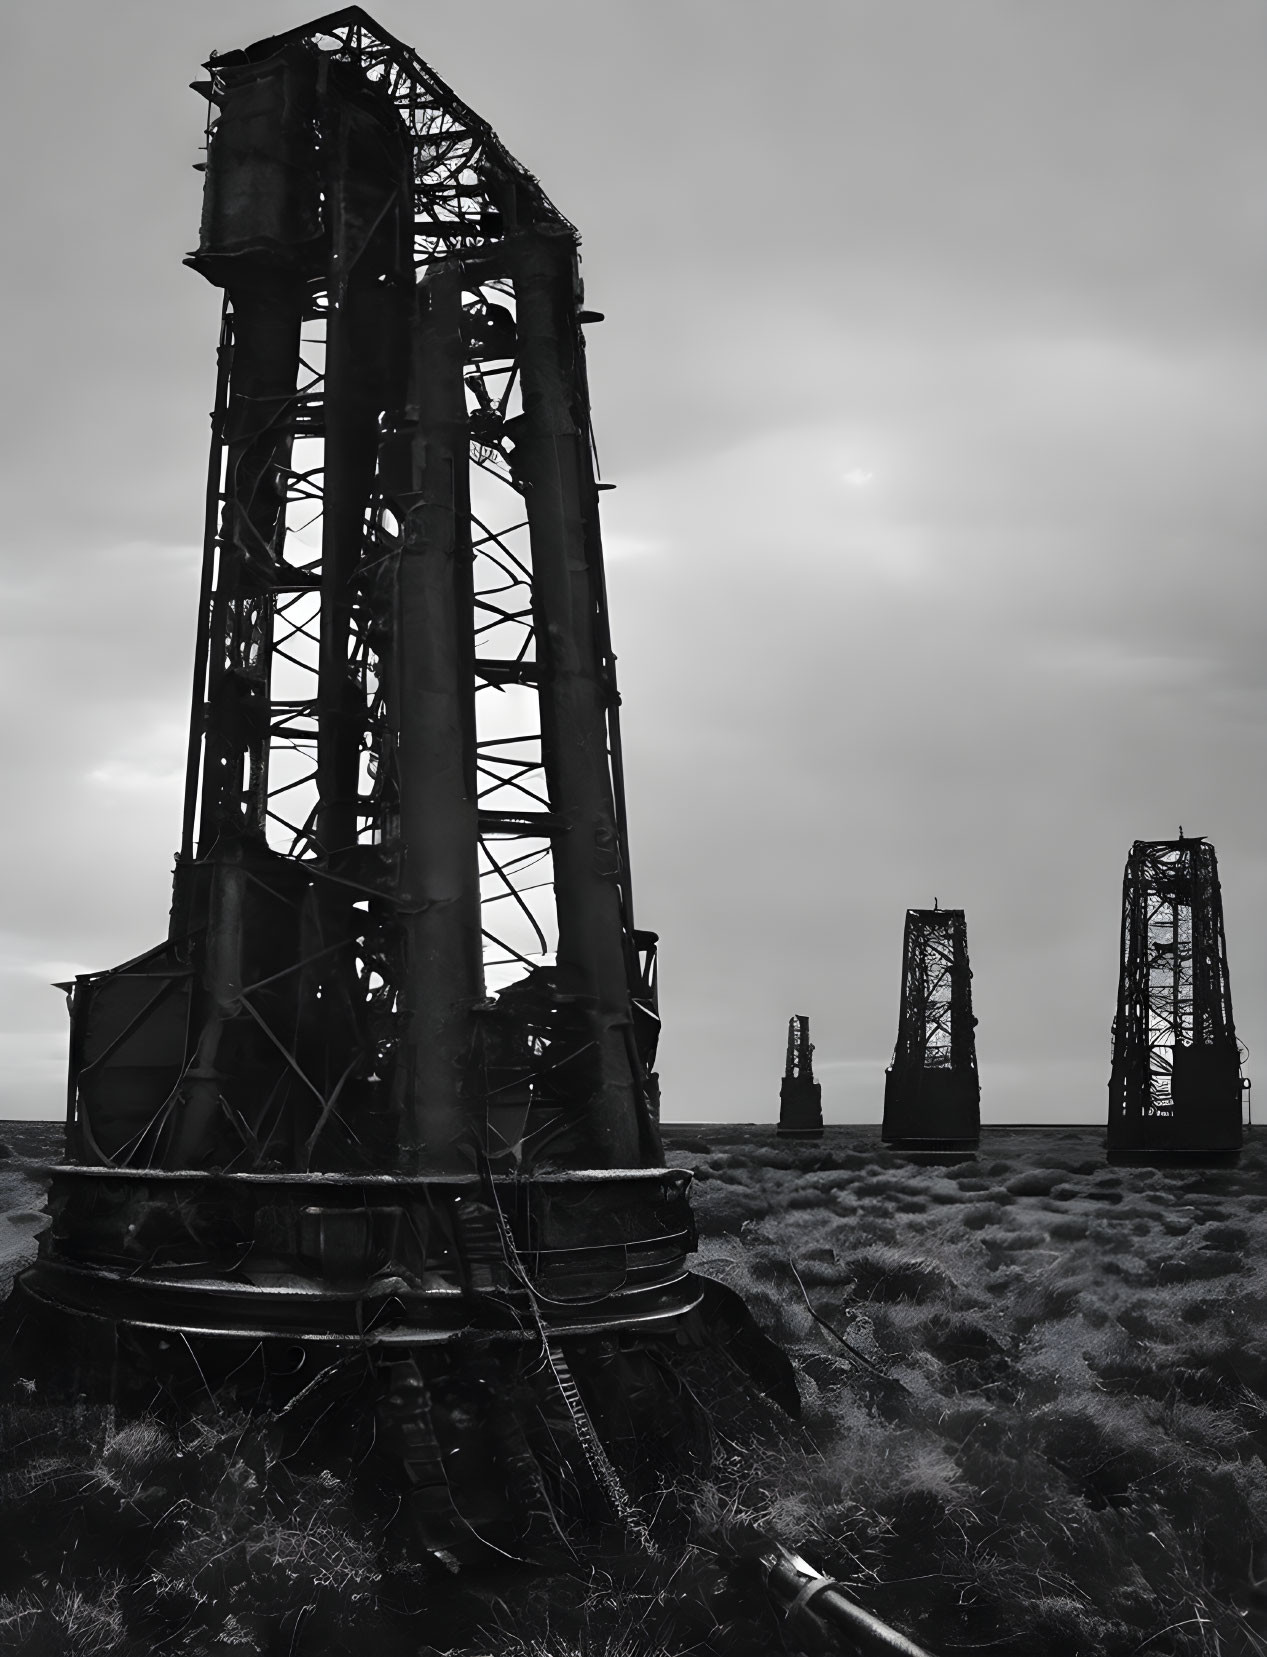 Abandoned oil derricks in bleak industrial landscape